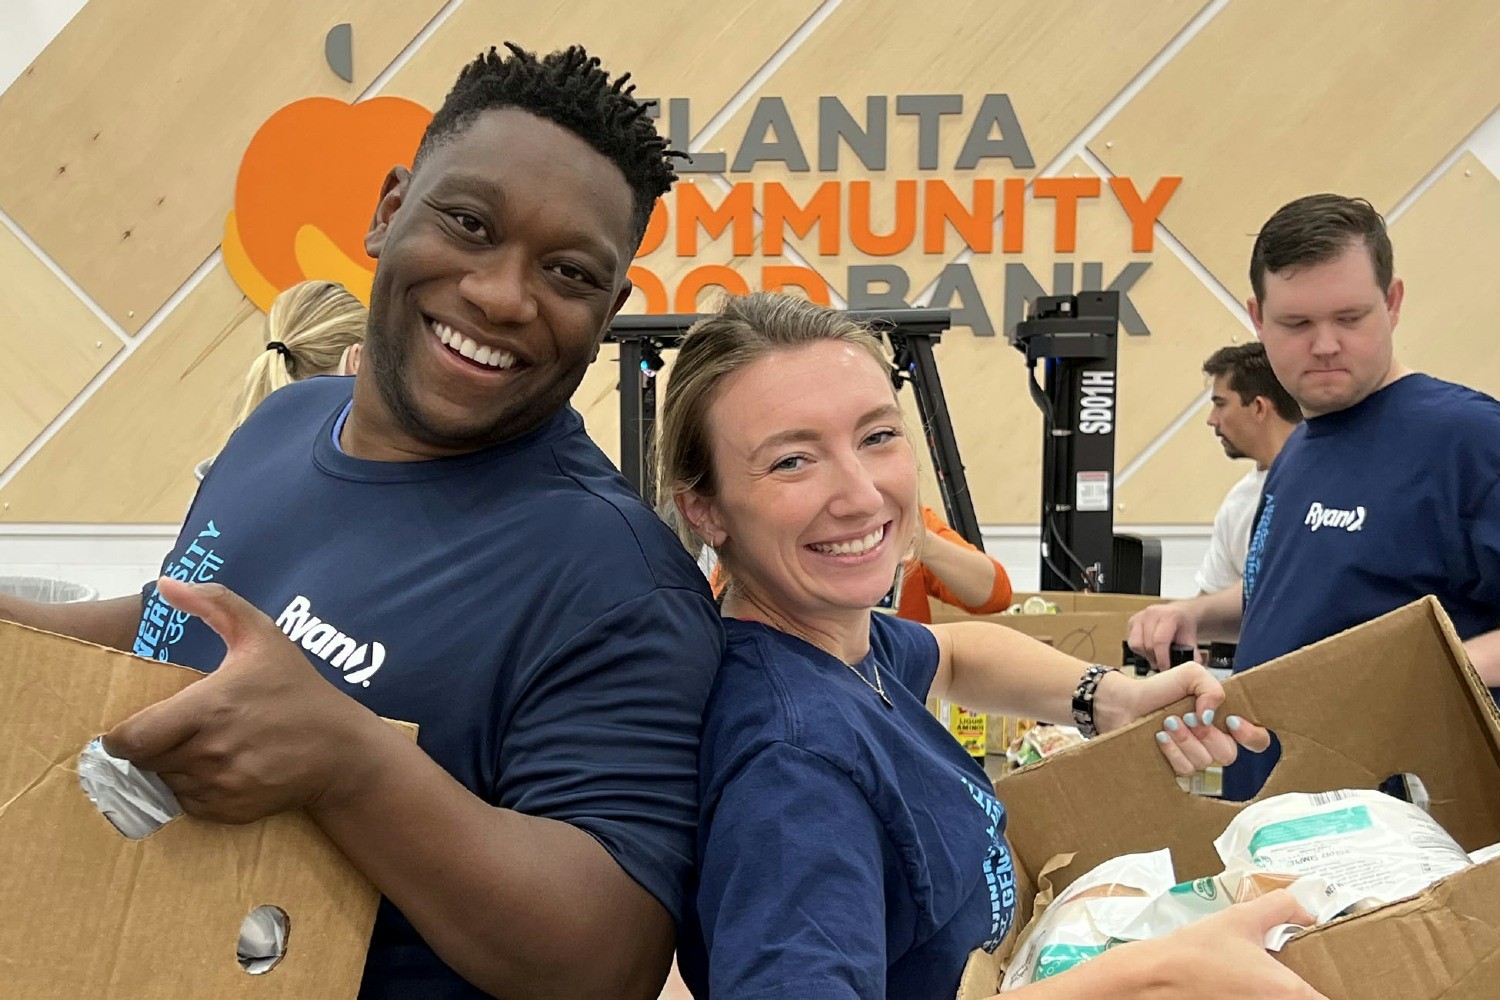 Ryan’s Atlanta team members work together to make a difference at the Atlanta Community Food Bank.